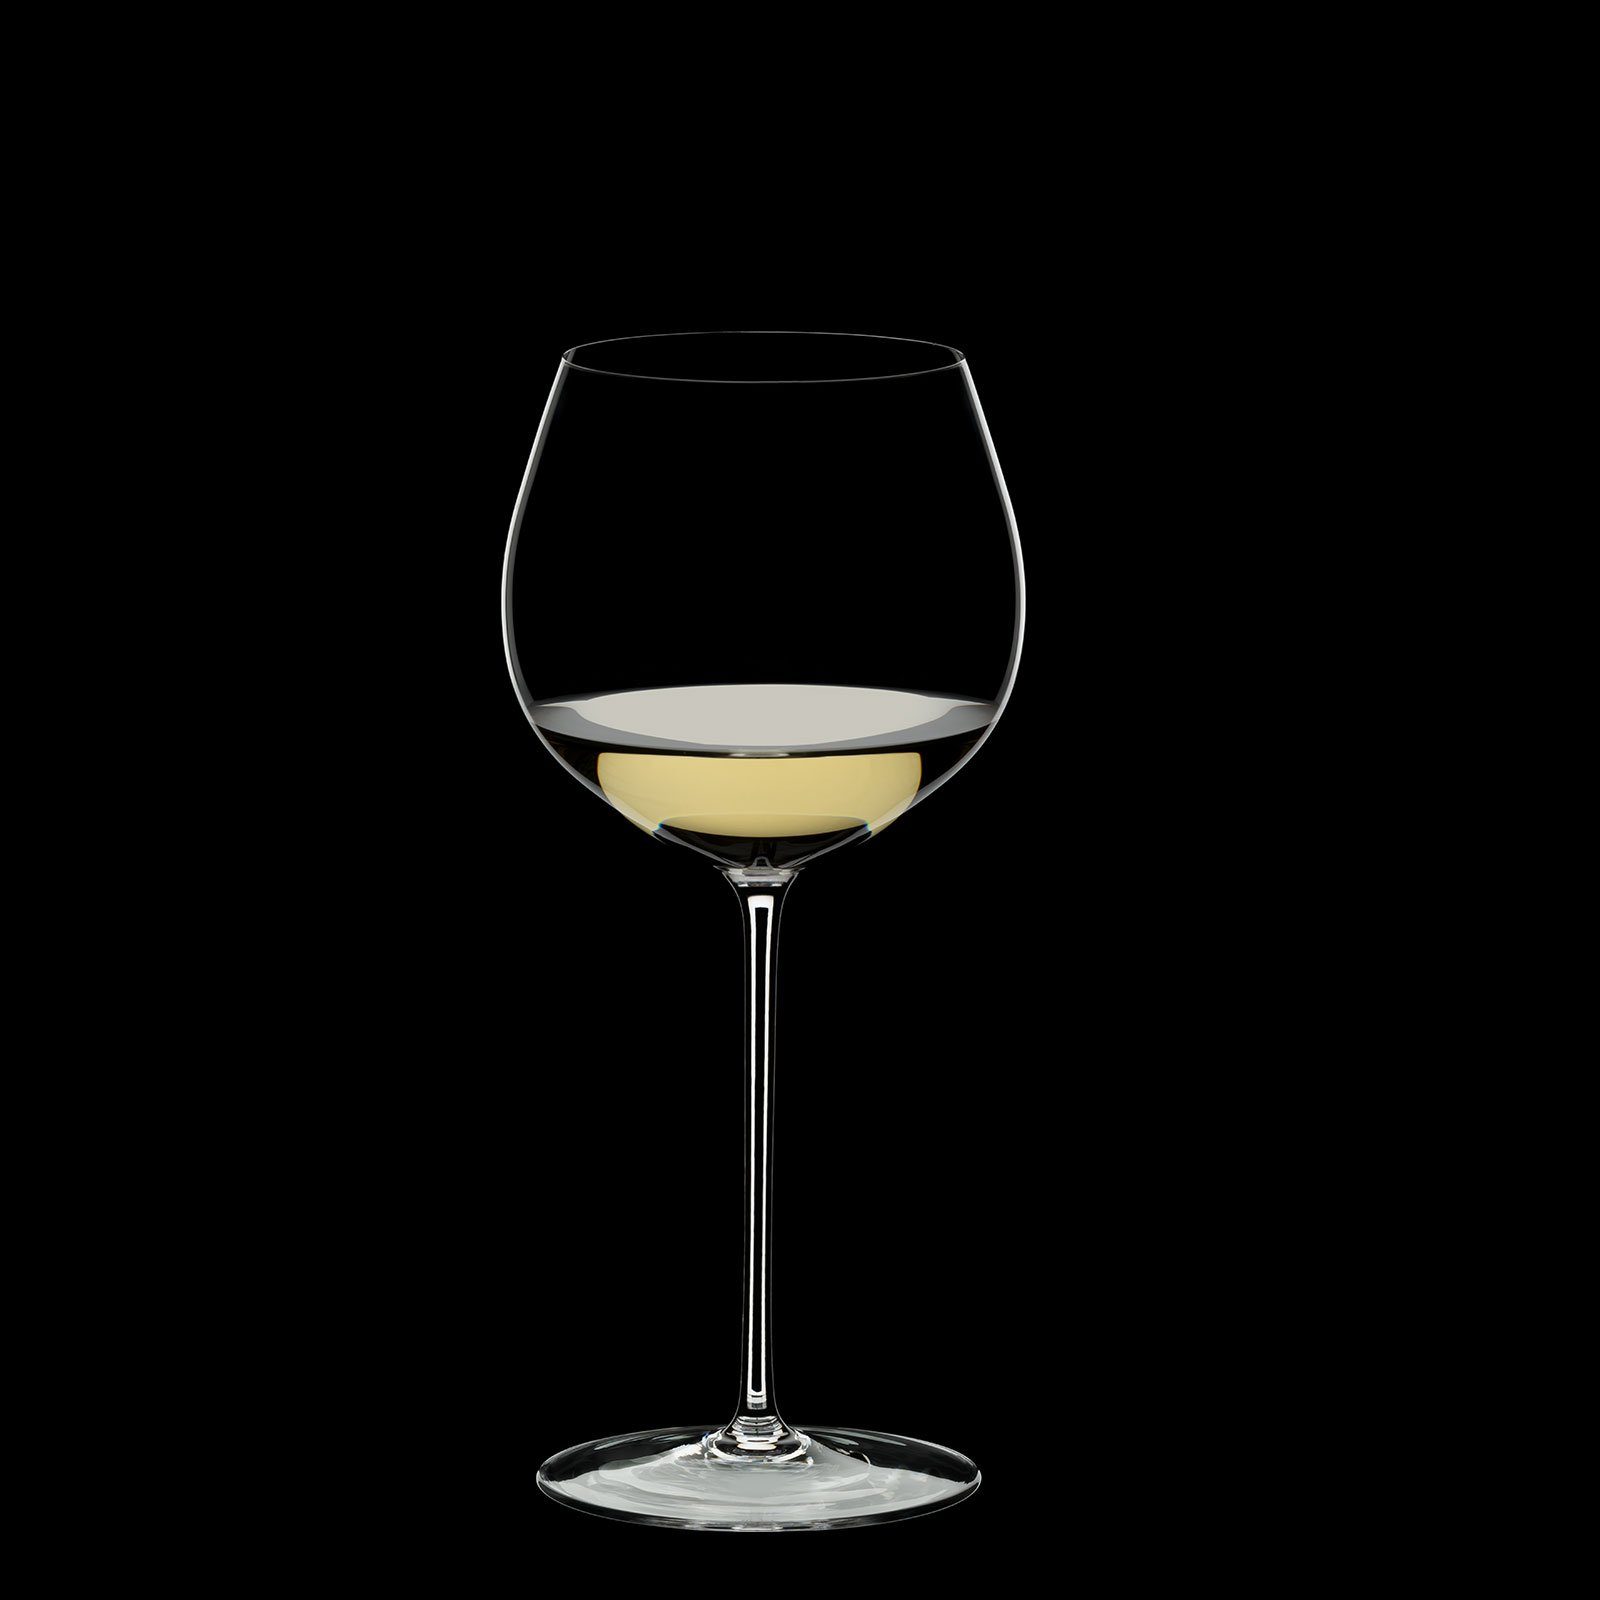 RIEDEL Superleggero Chardonnay, Kristallglas Glas Glas Oaked Riedel